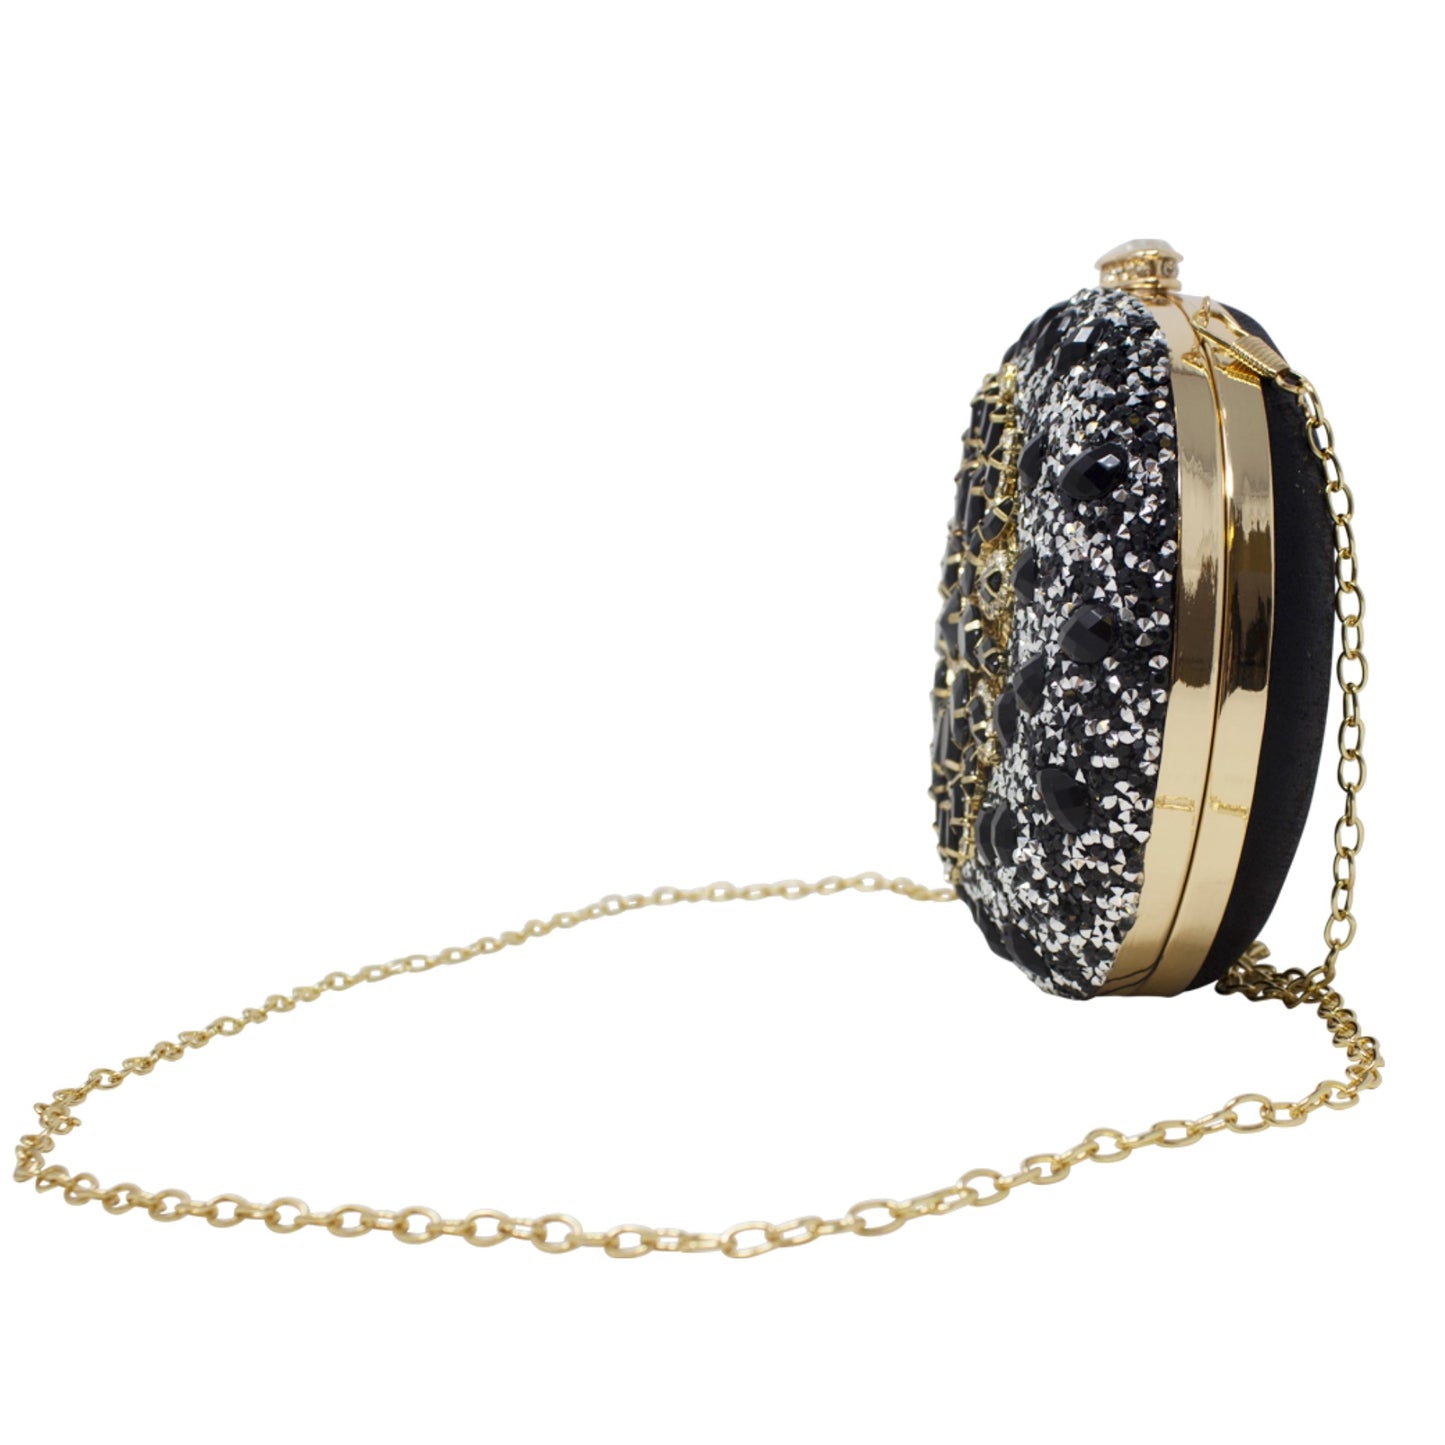 Sparkly Black Gold Diamante Encrusted Clutch Bag